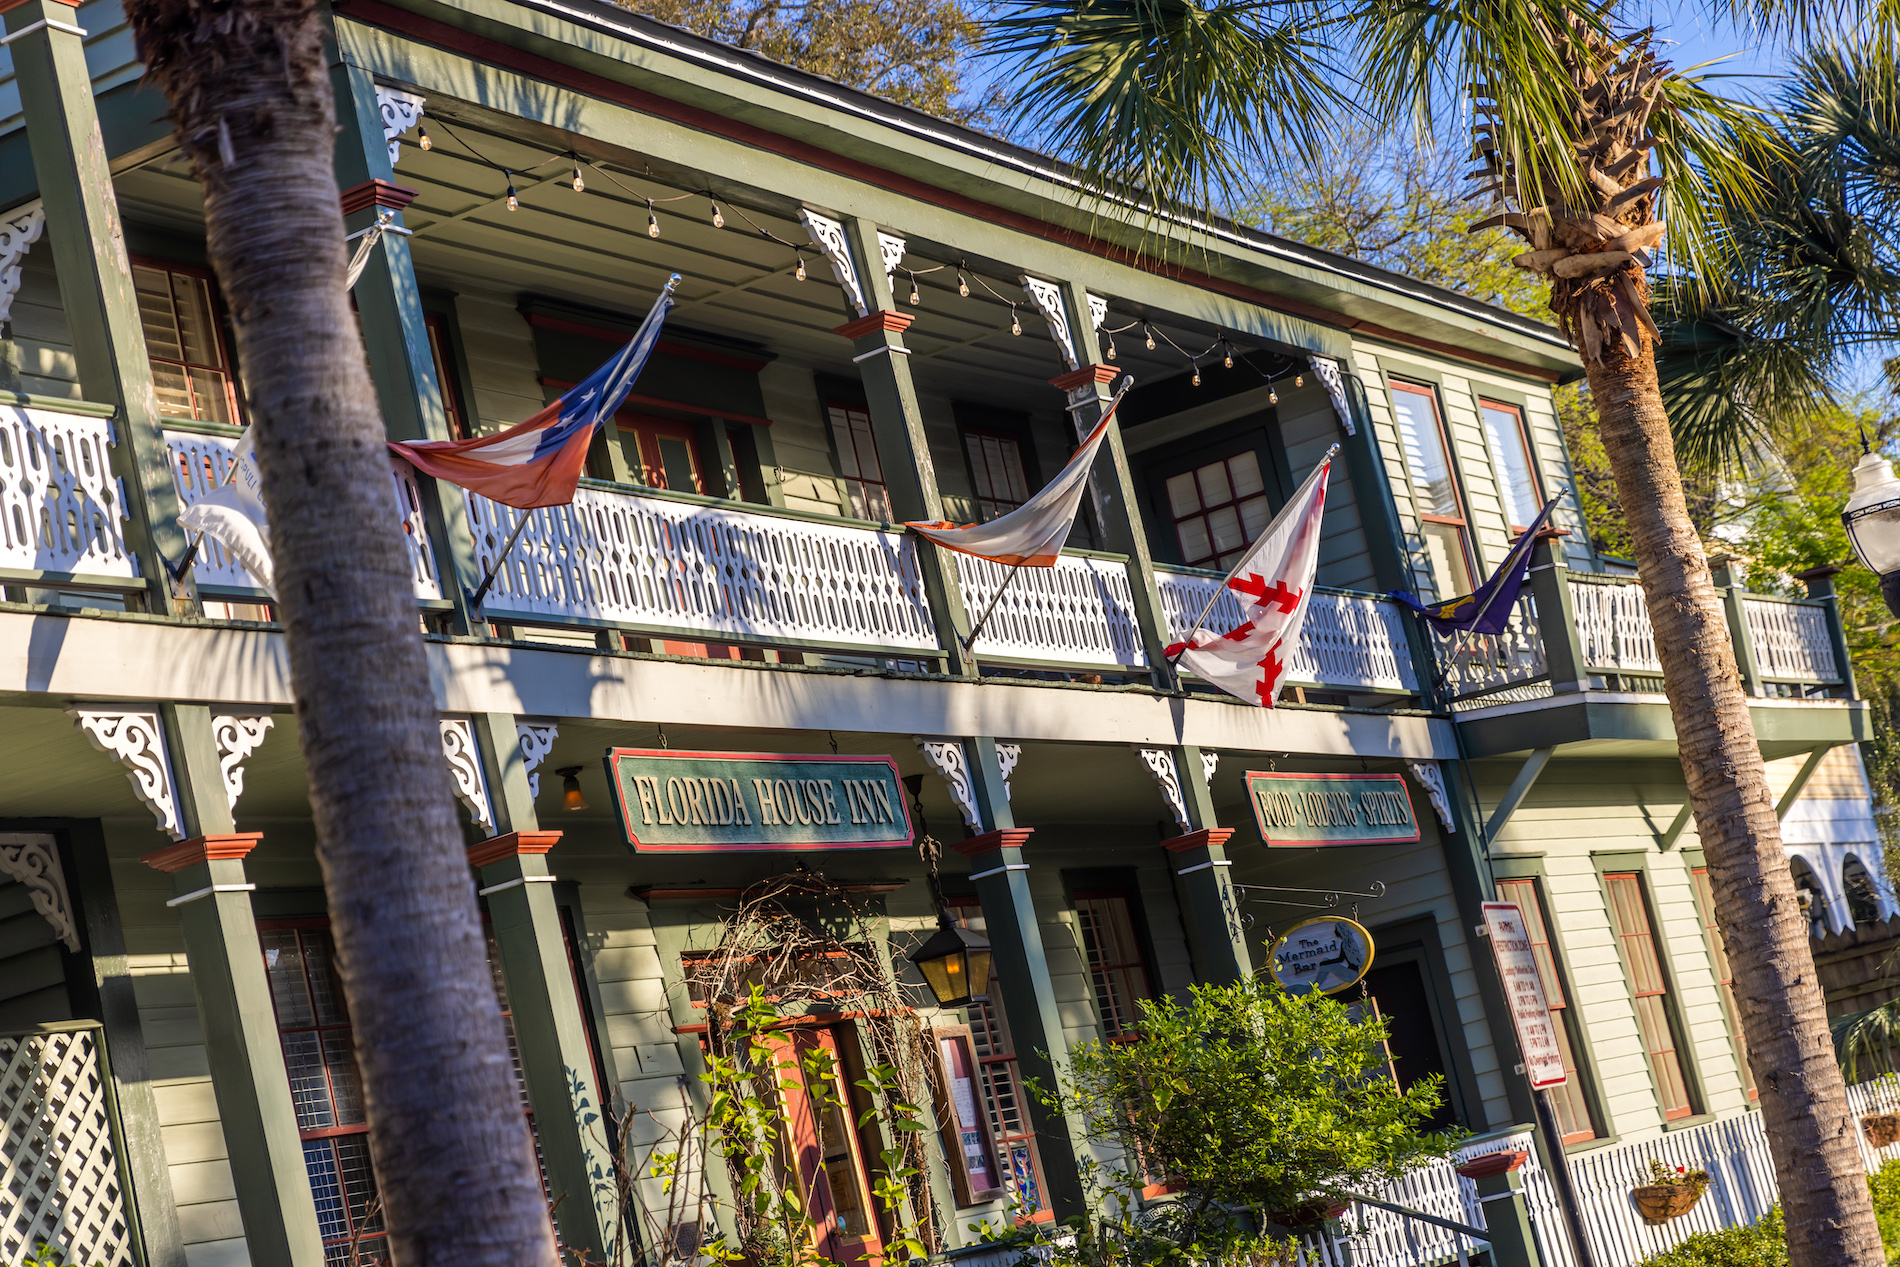 Florida House Inn flags